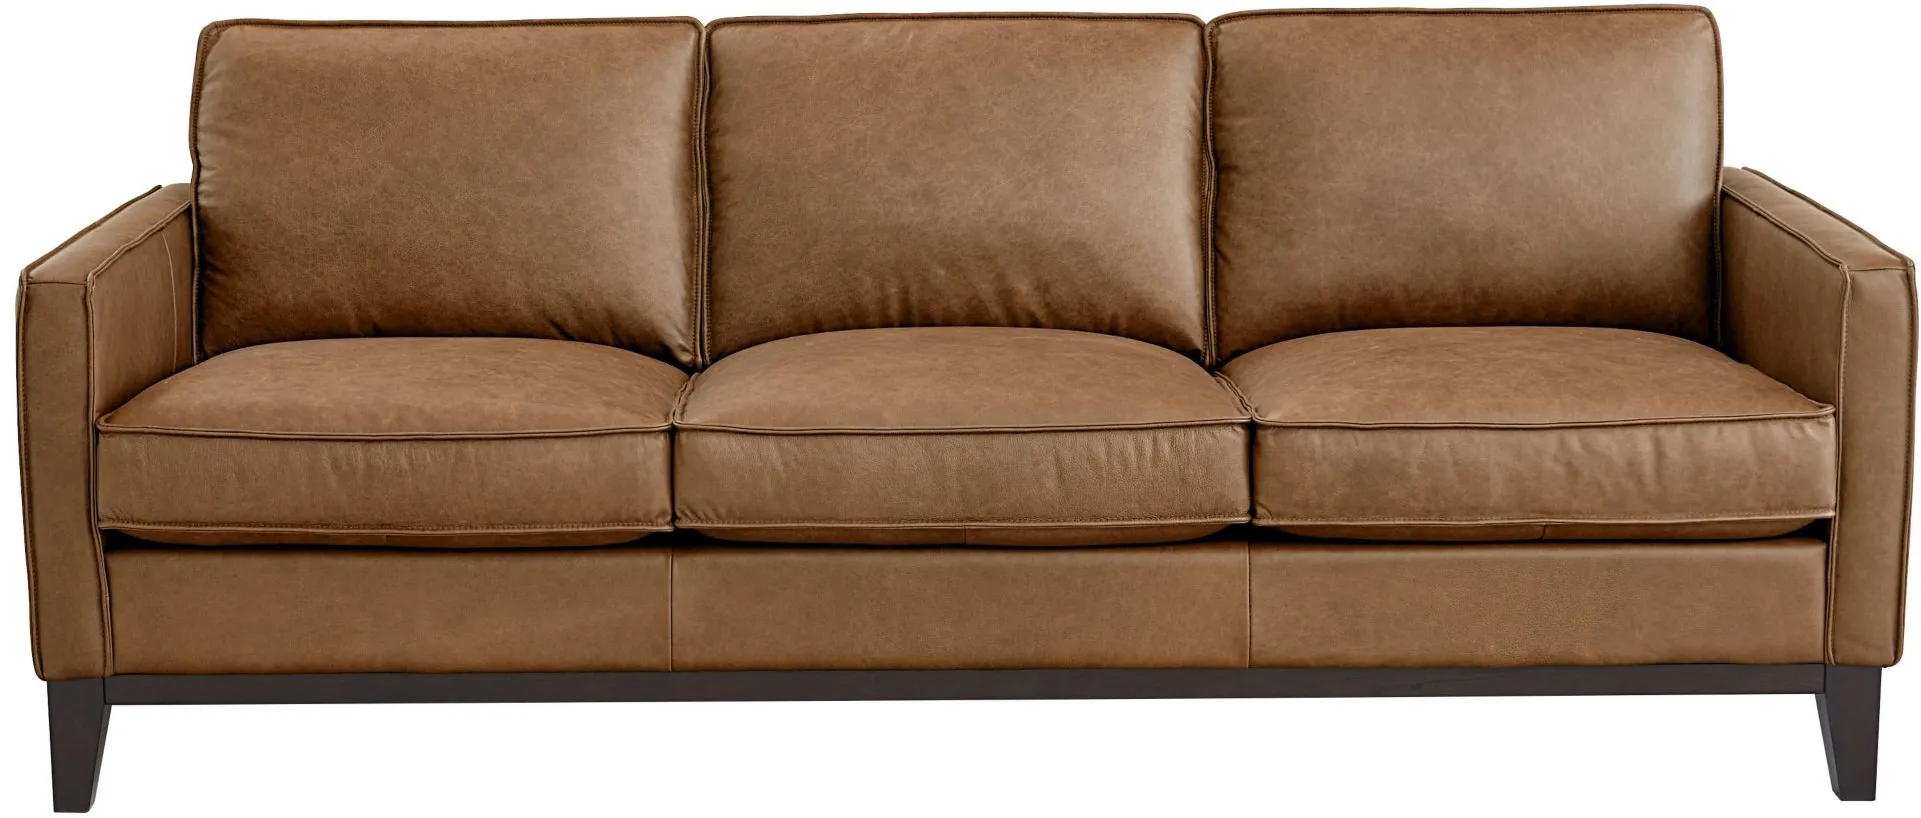 gtr leather inc monza leather sofa